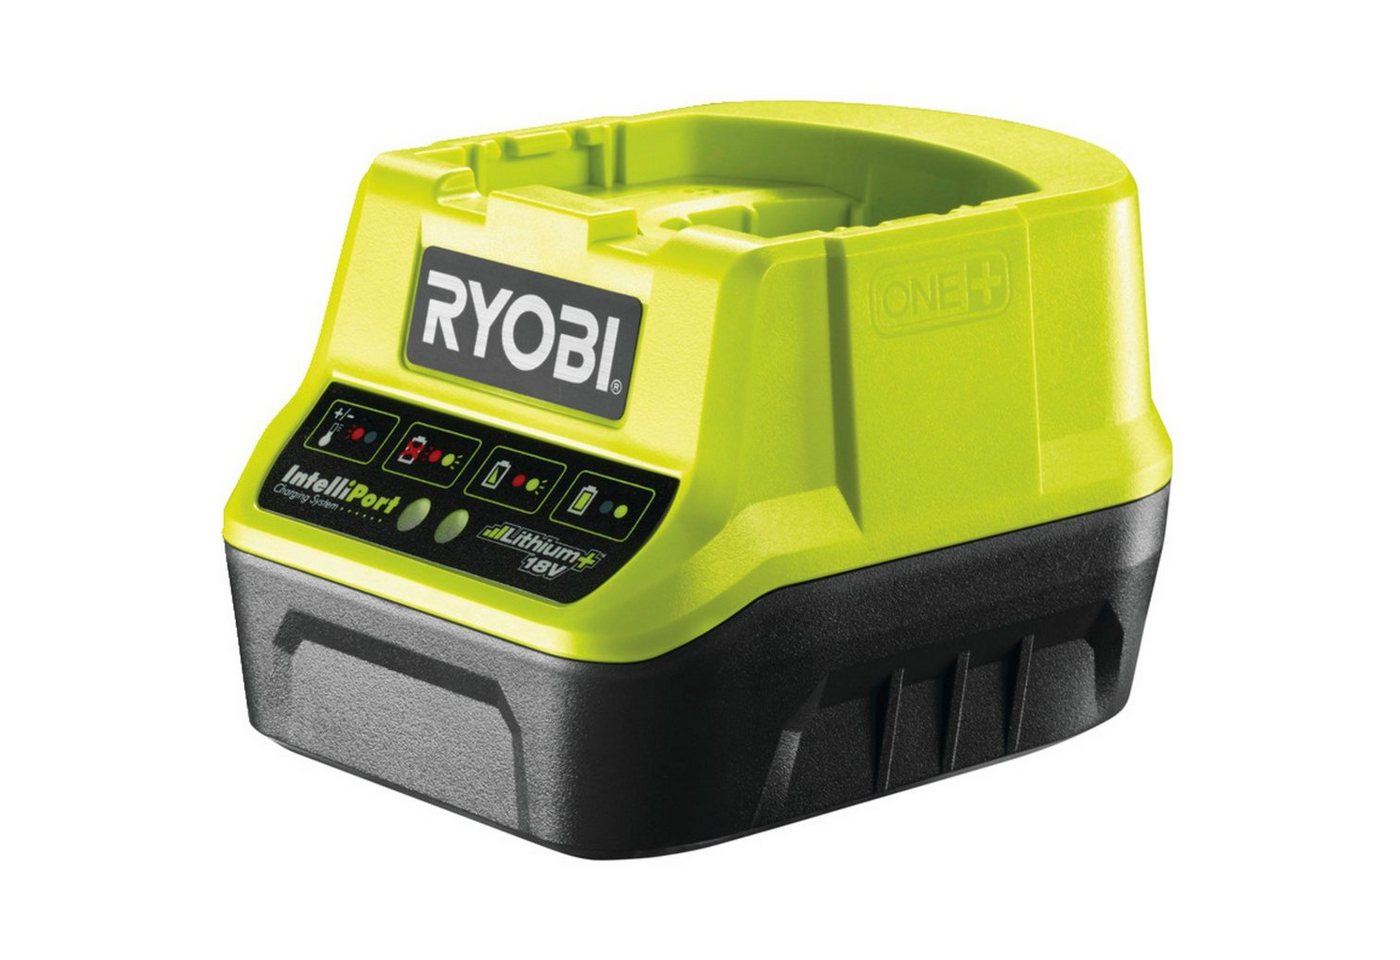 Ryobi 18 V ONE+ Schnellladegerät RC18120 Werkzeug-Akku-Ladetechnik von Ryobi